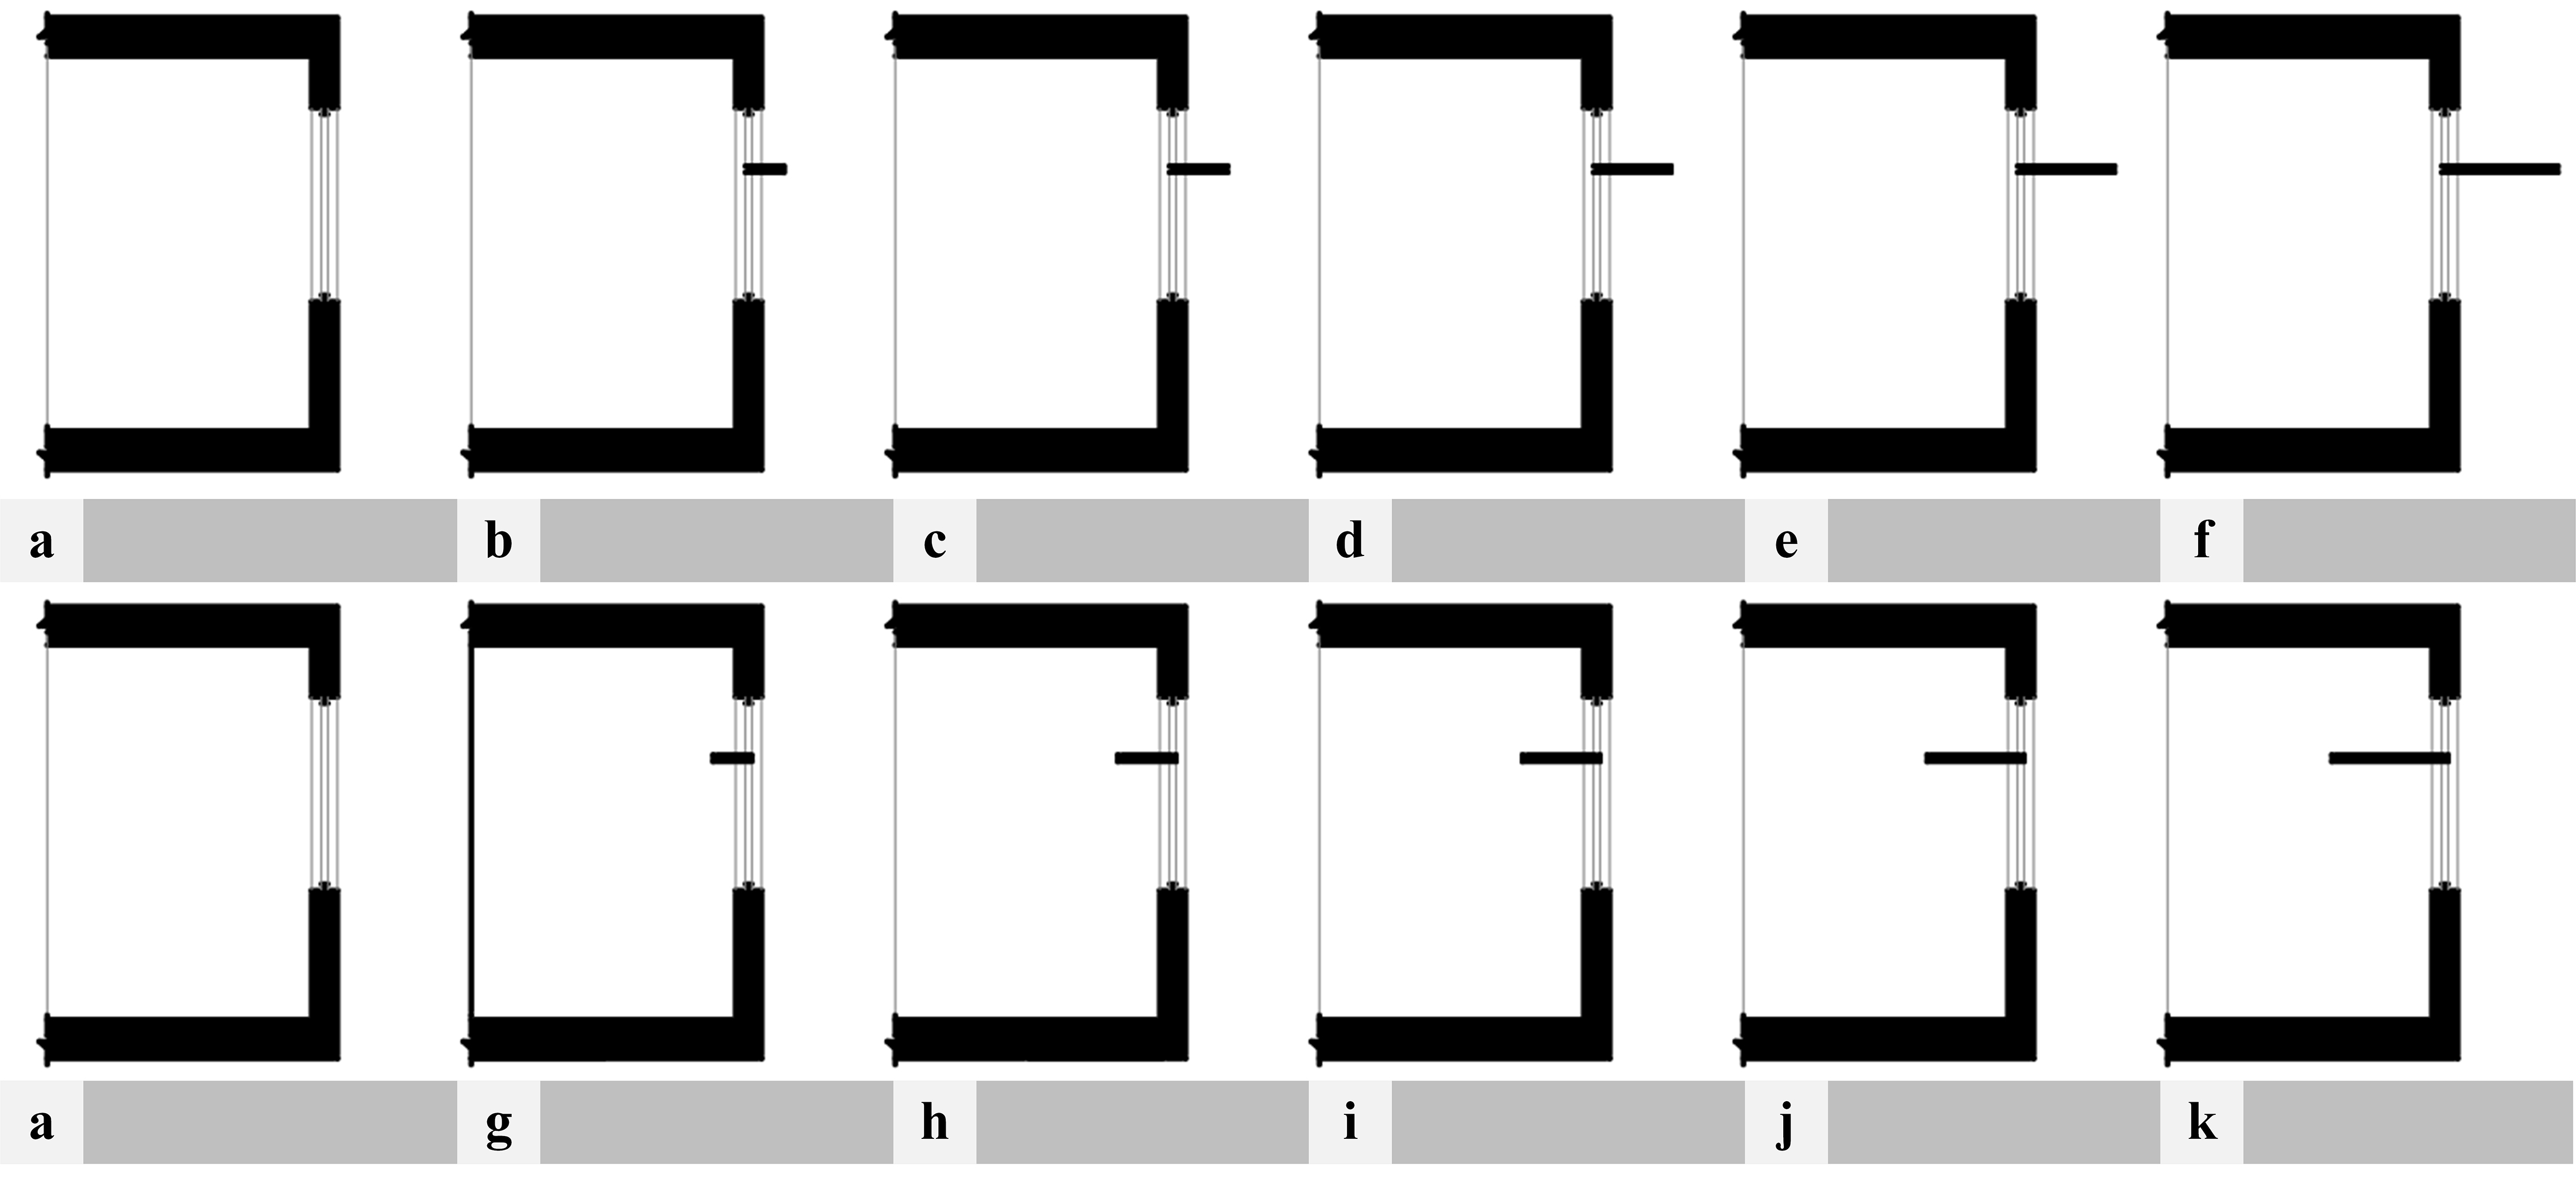 Light shelves’ configurations: exterior (a-f): a: base case, b: 0.30 m, c: 0.45m, d: 0.60m, e: 0.75m, f: 0.90m / Interior (a-k): a: base model, g: 0.30m, h: 0.45m, i: 0.60m, j: 0.75m, k: 0.90m.